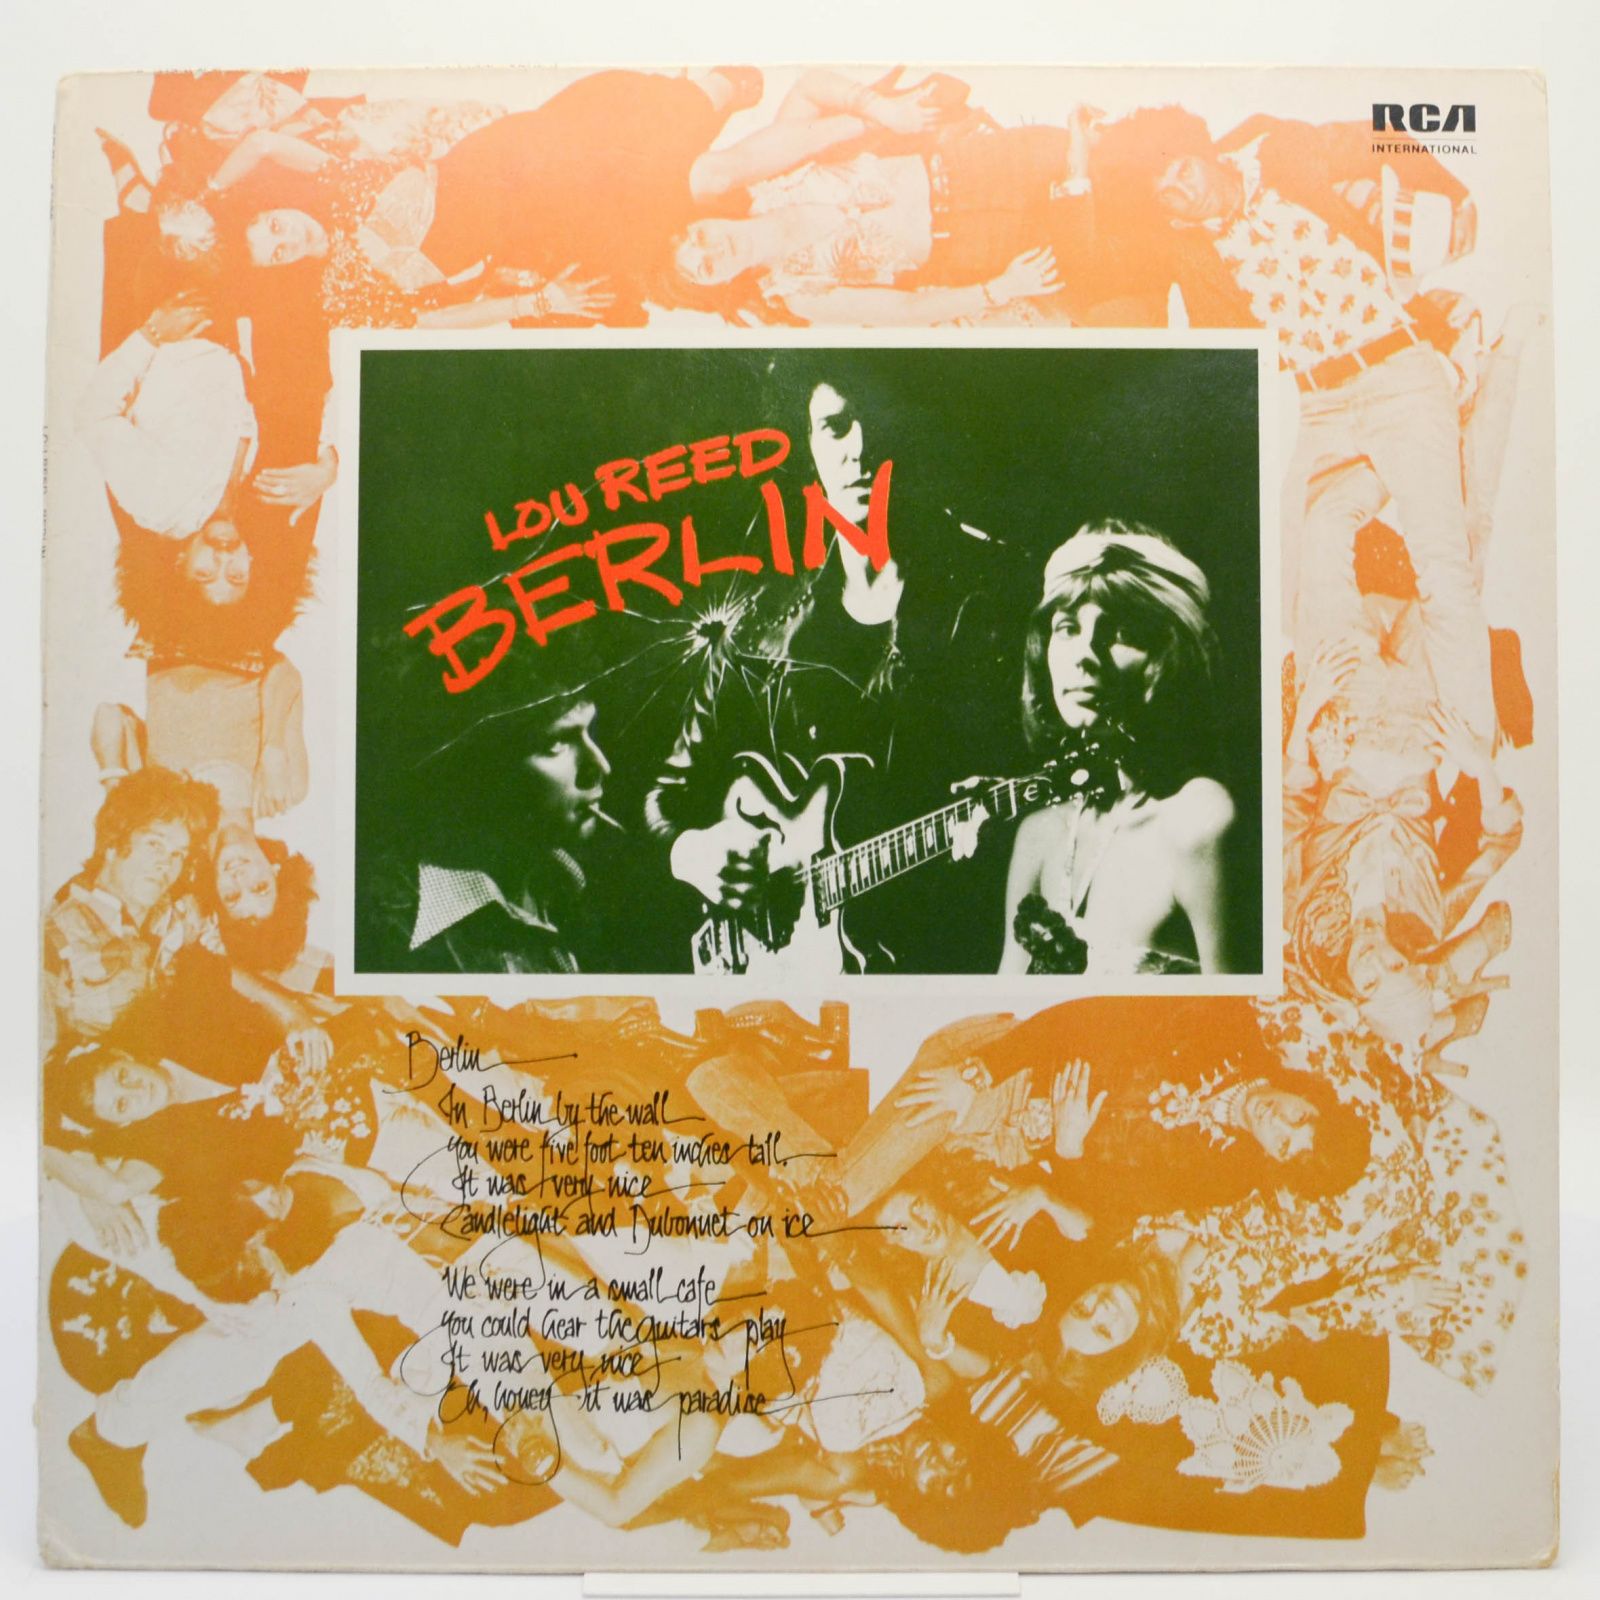 Lou Reed — Berlin, 1973